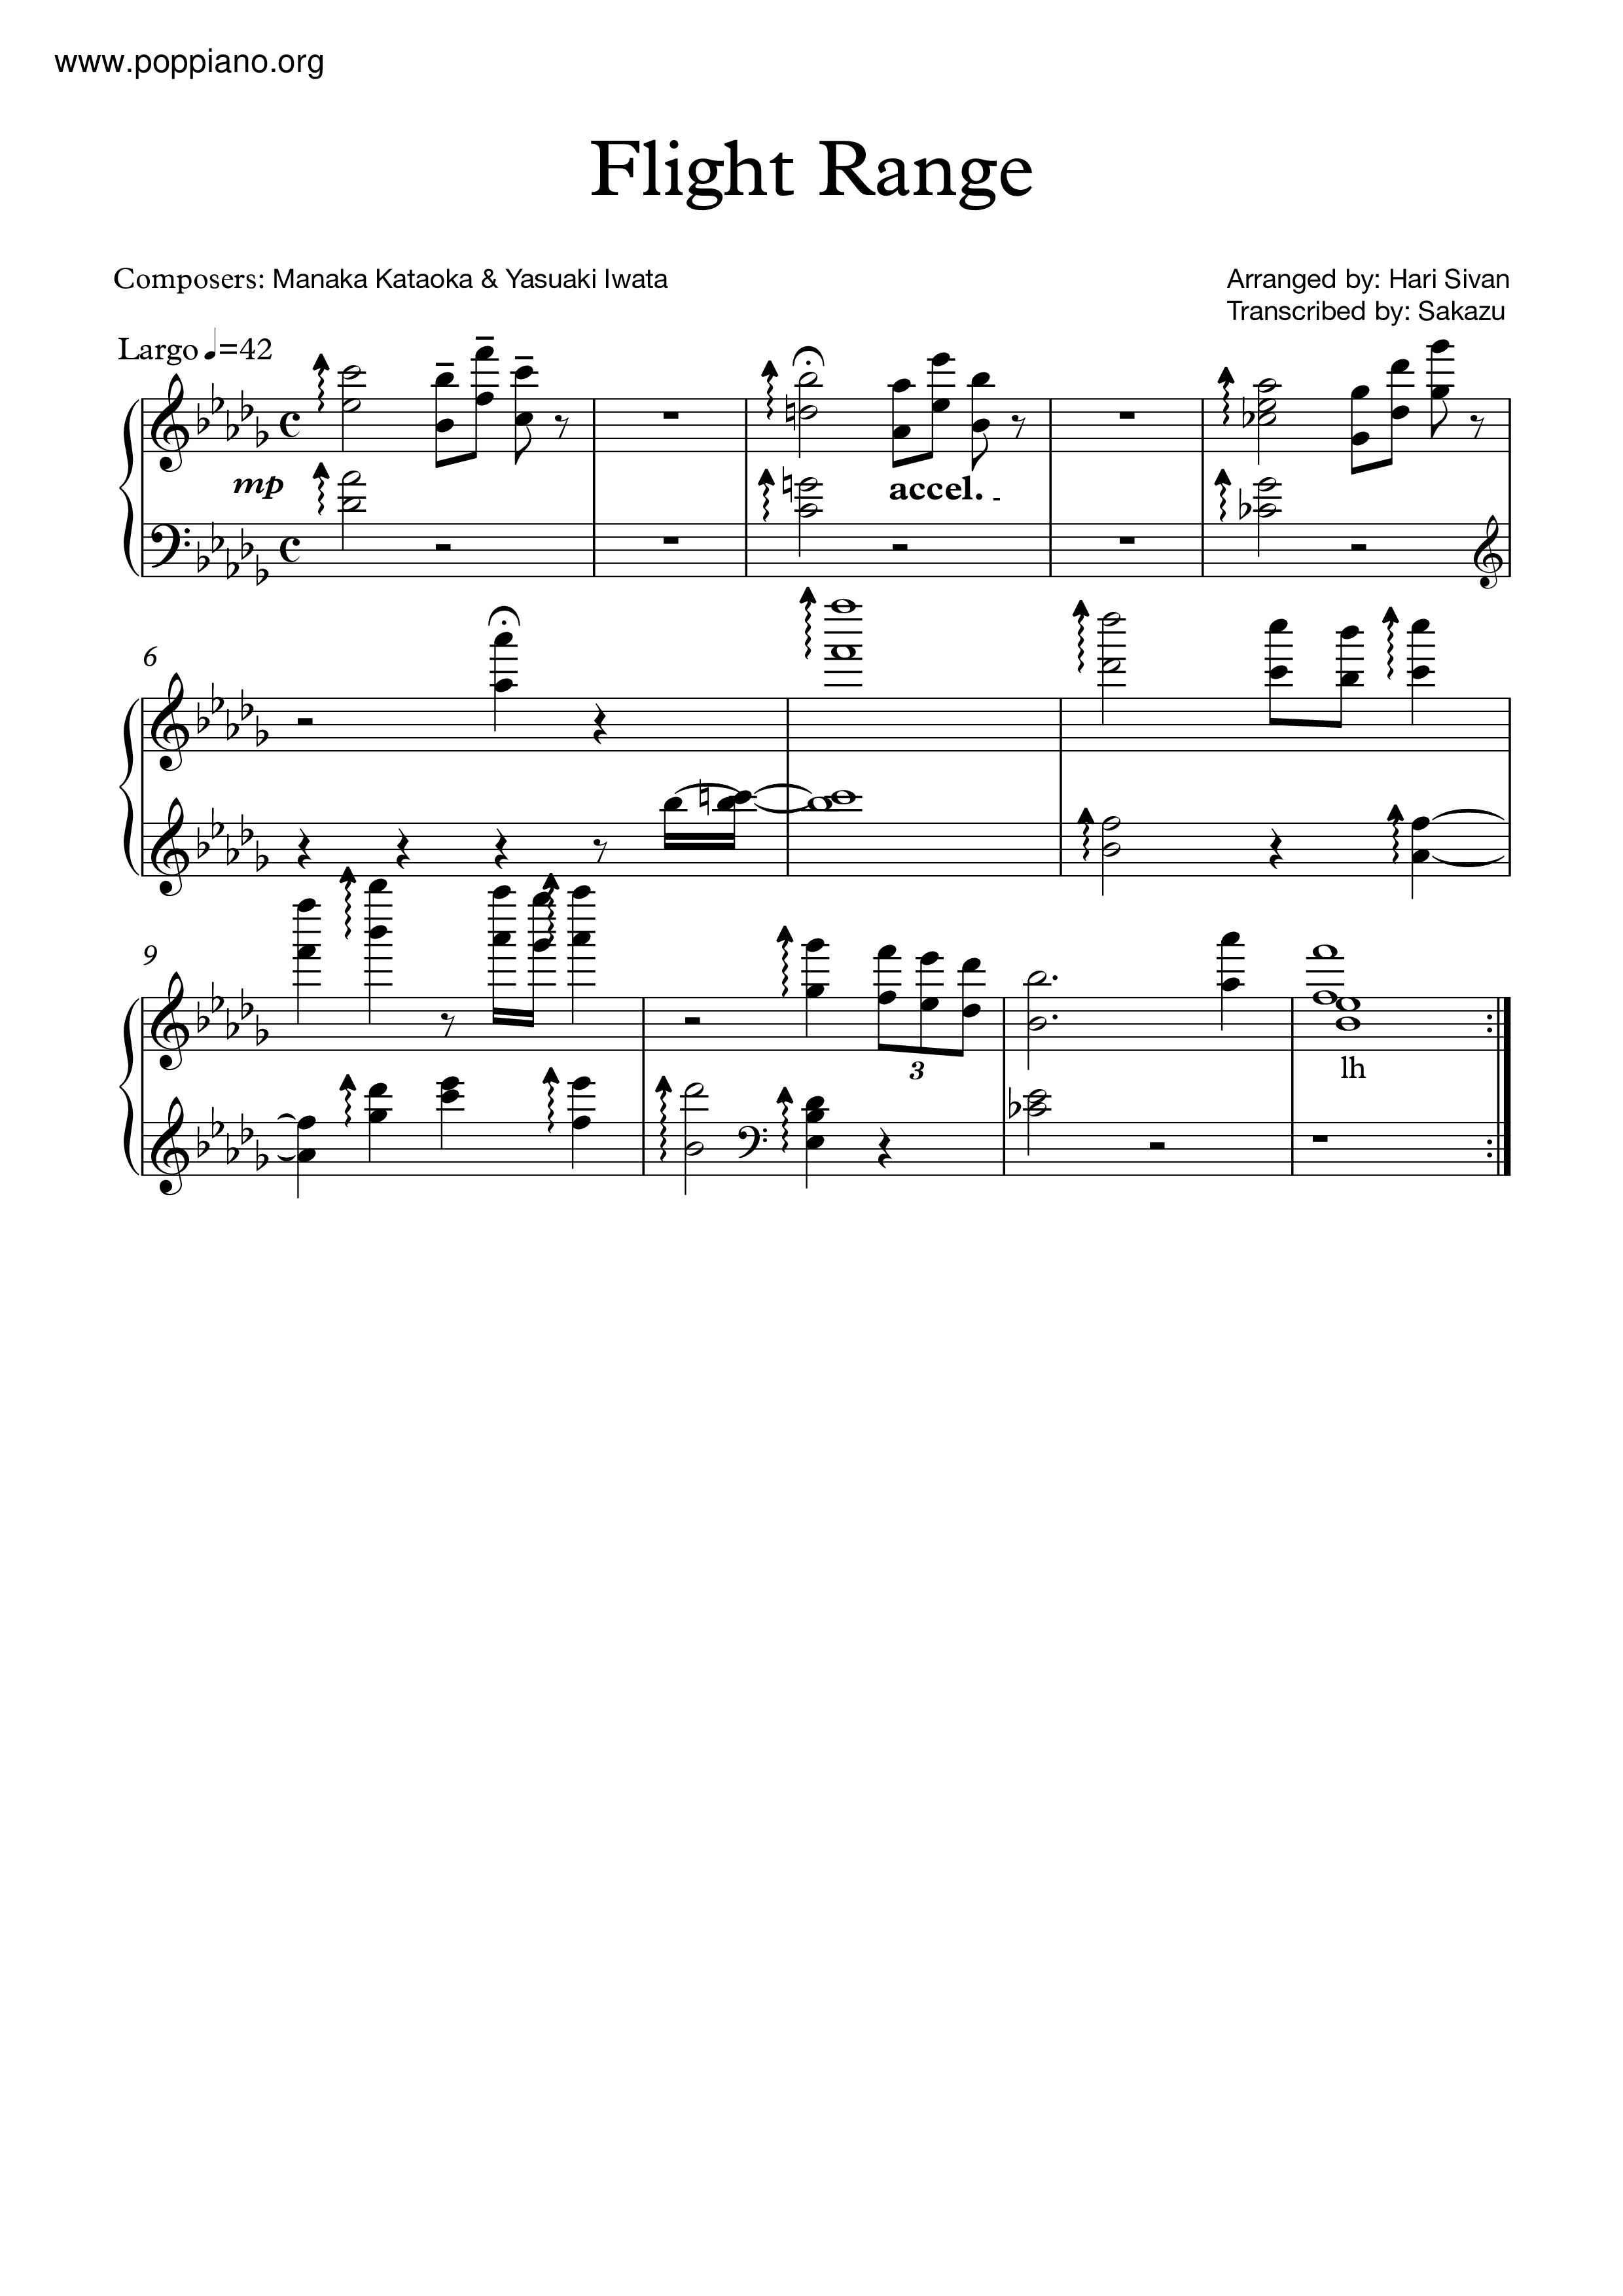 Leer Cámara gorra ☆ Zelda - Breath Of The Wild-Flight Range Sheet Music pdf, - Free Score  Download ☆